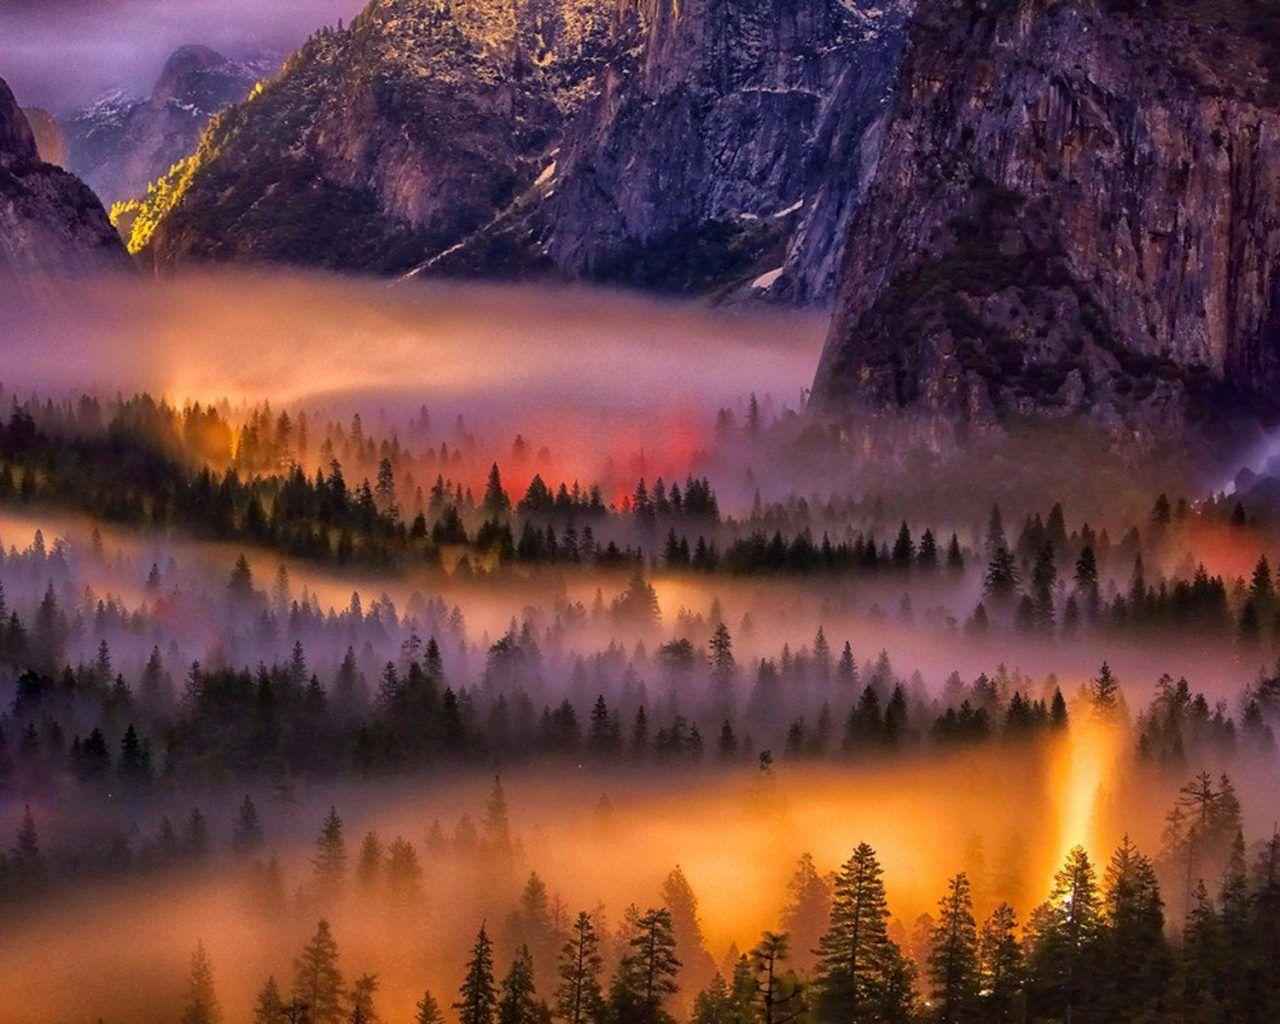 Best Photo In Photohop Fire Yosemite National Park Yosemite